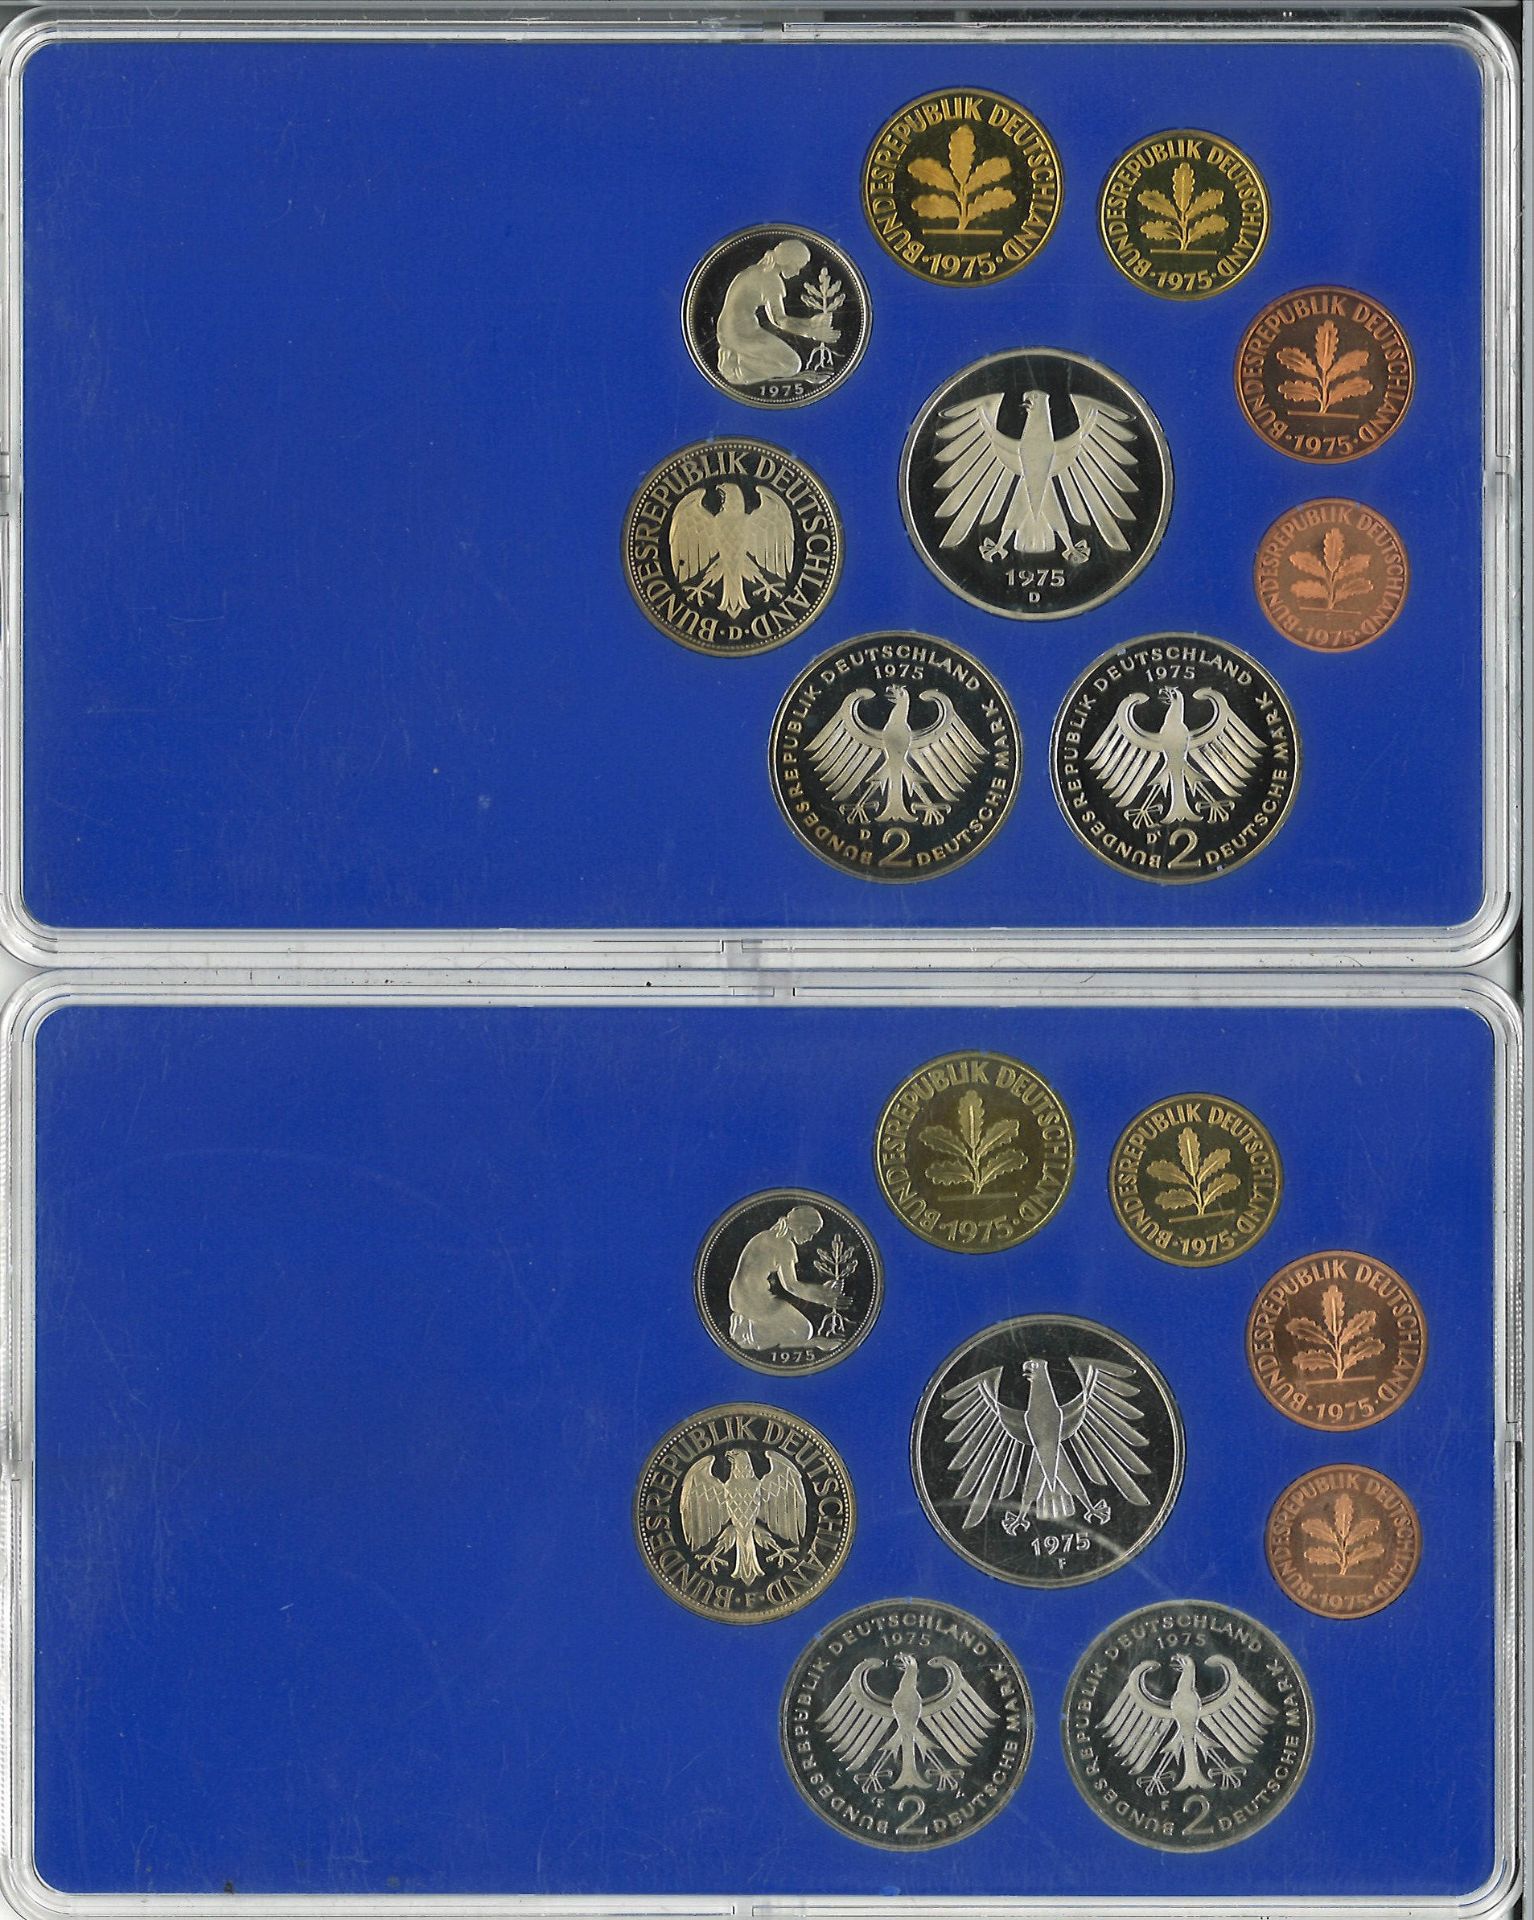 BRD Münzsets Jahrgang 1975, D, F, G und J. Im Original Blister. - Bild 2 aus 4